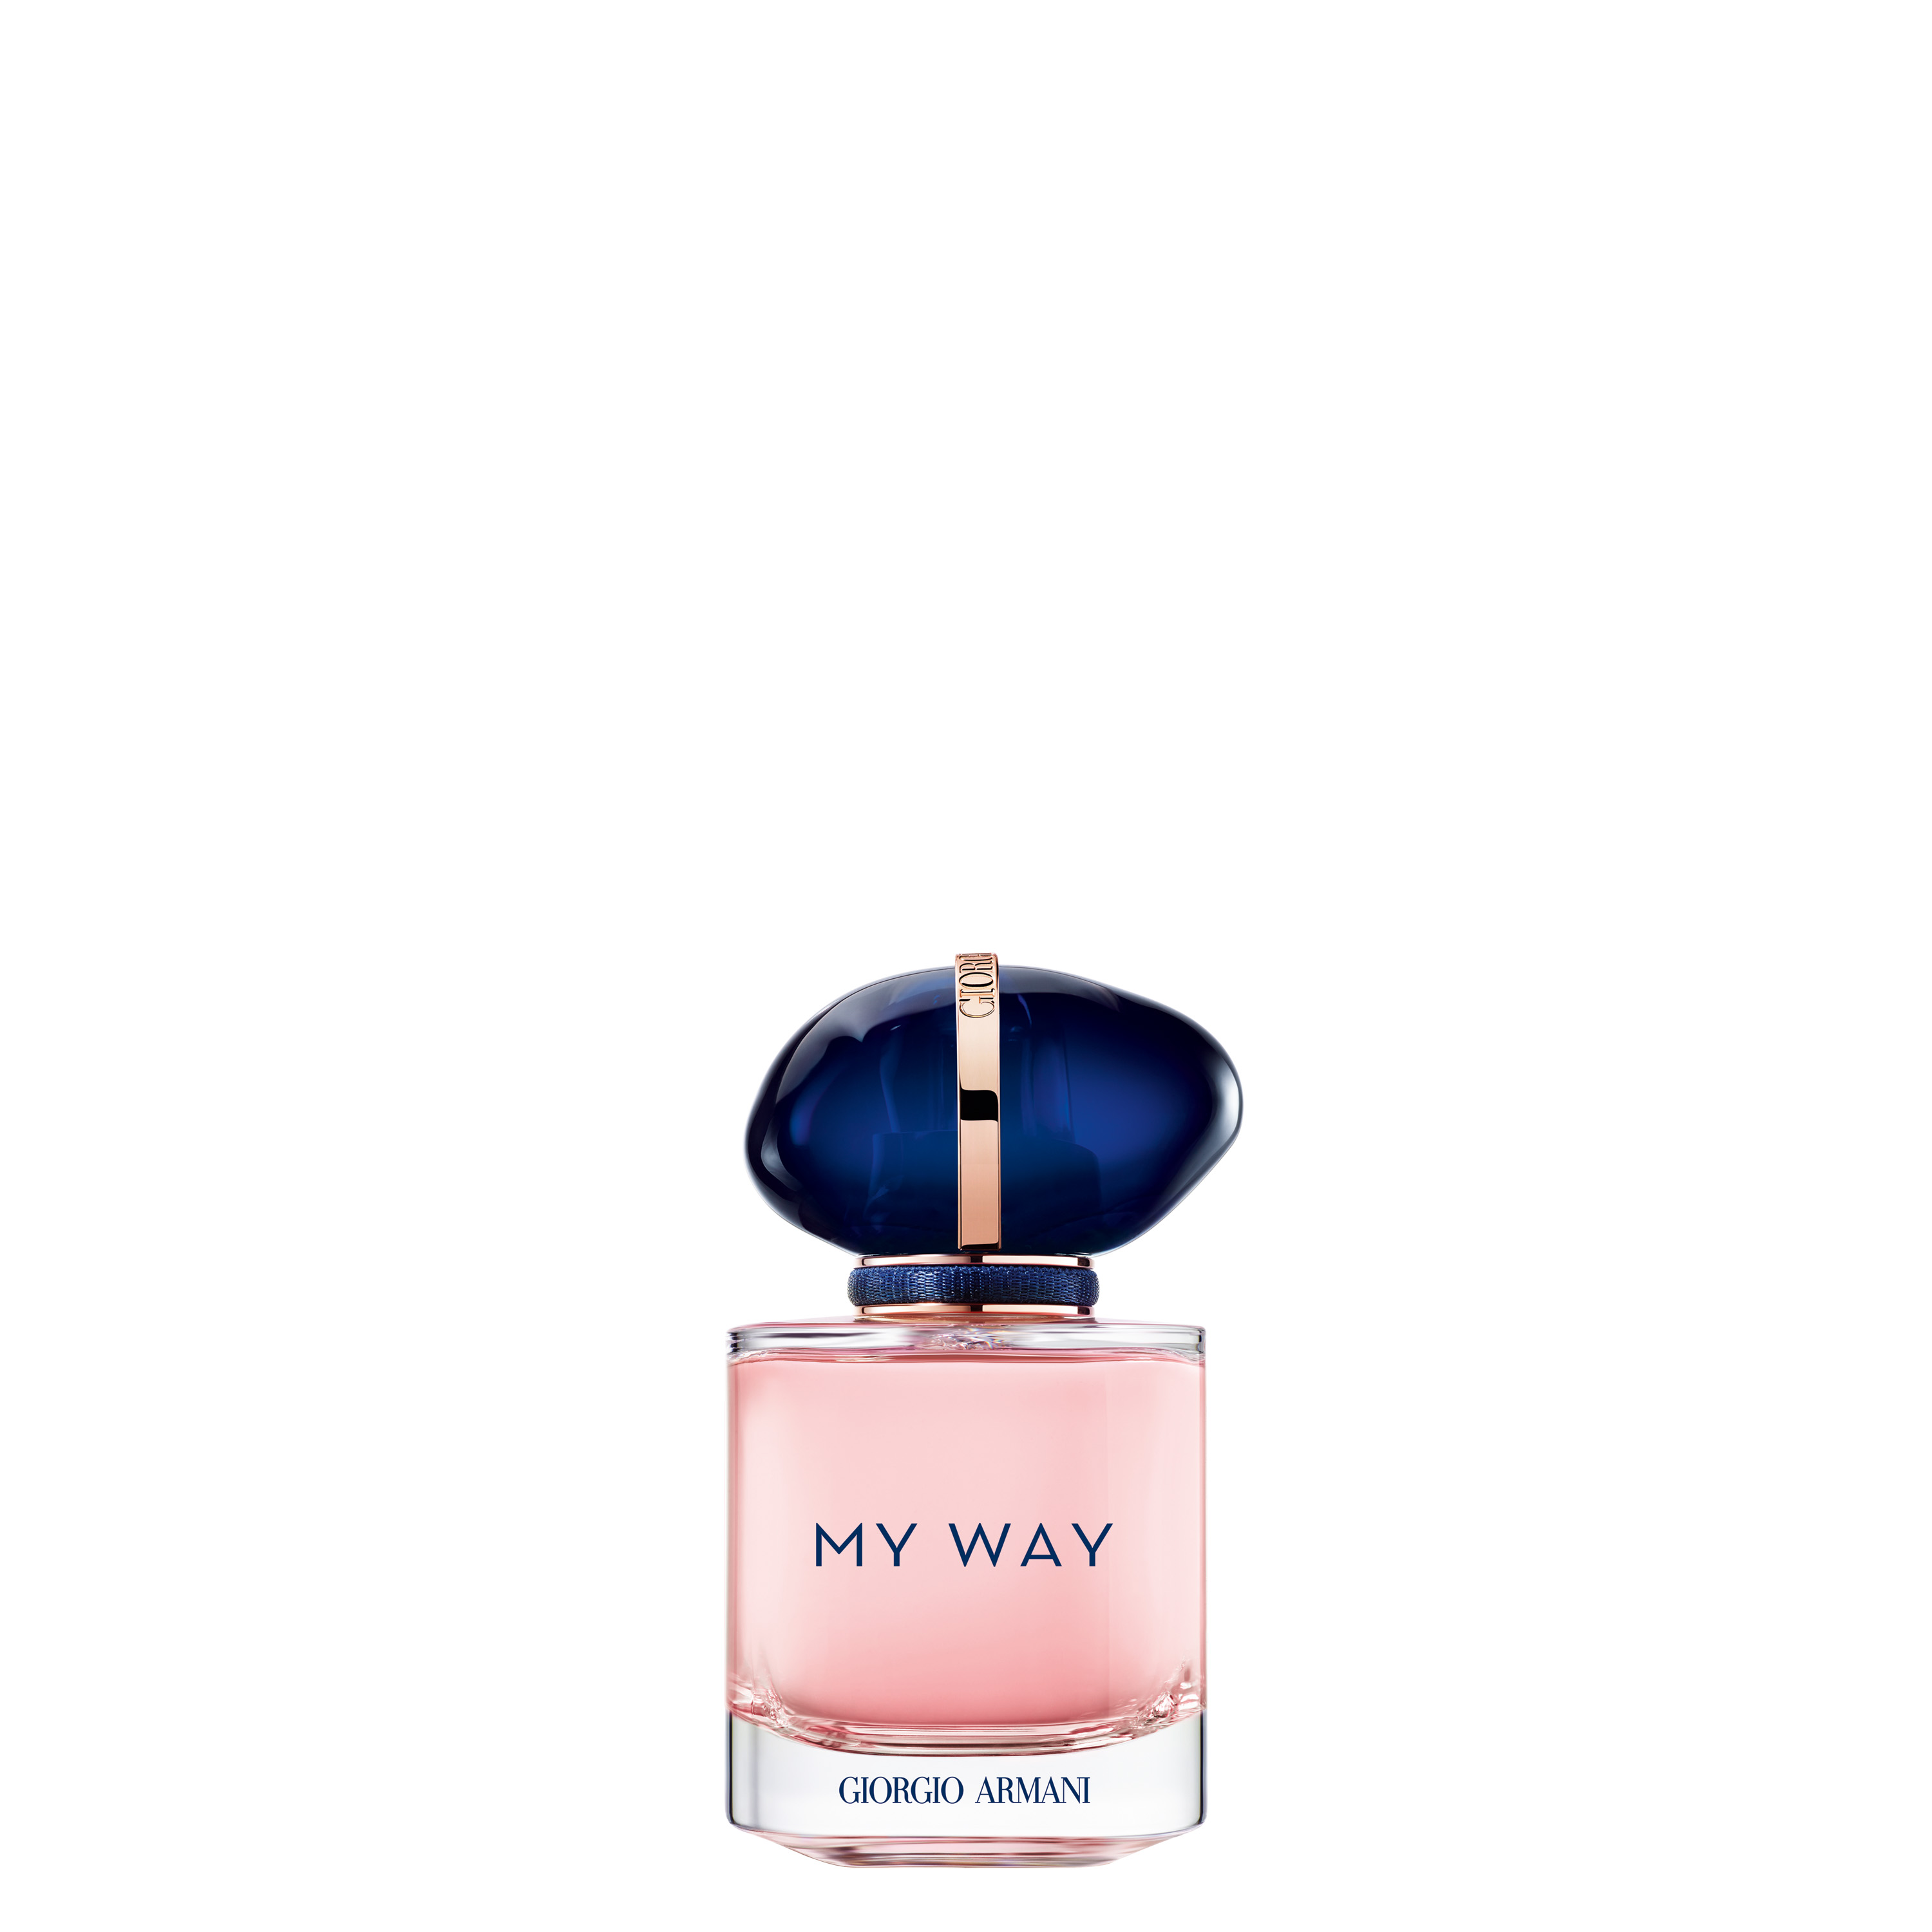  My Way Eau De Parfum 30 ml